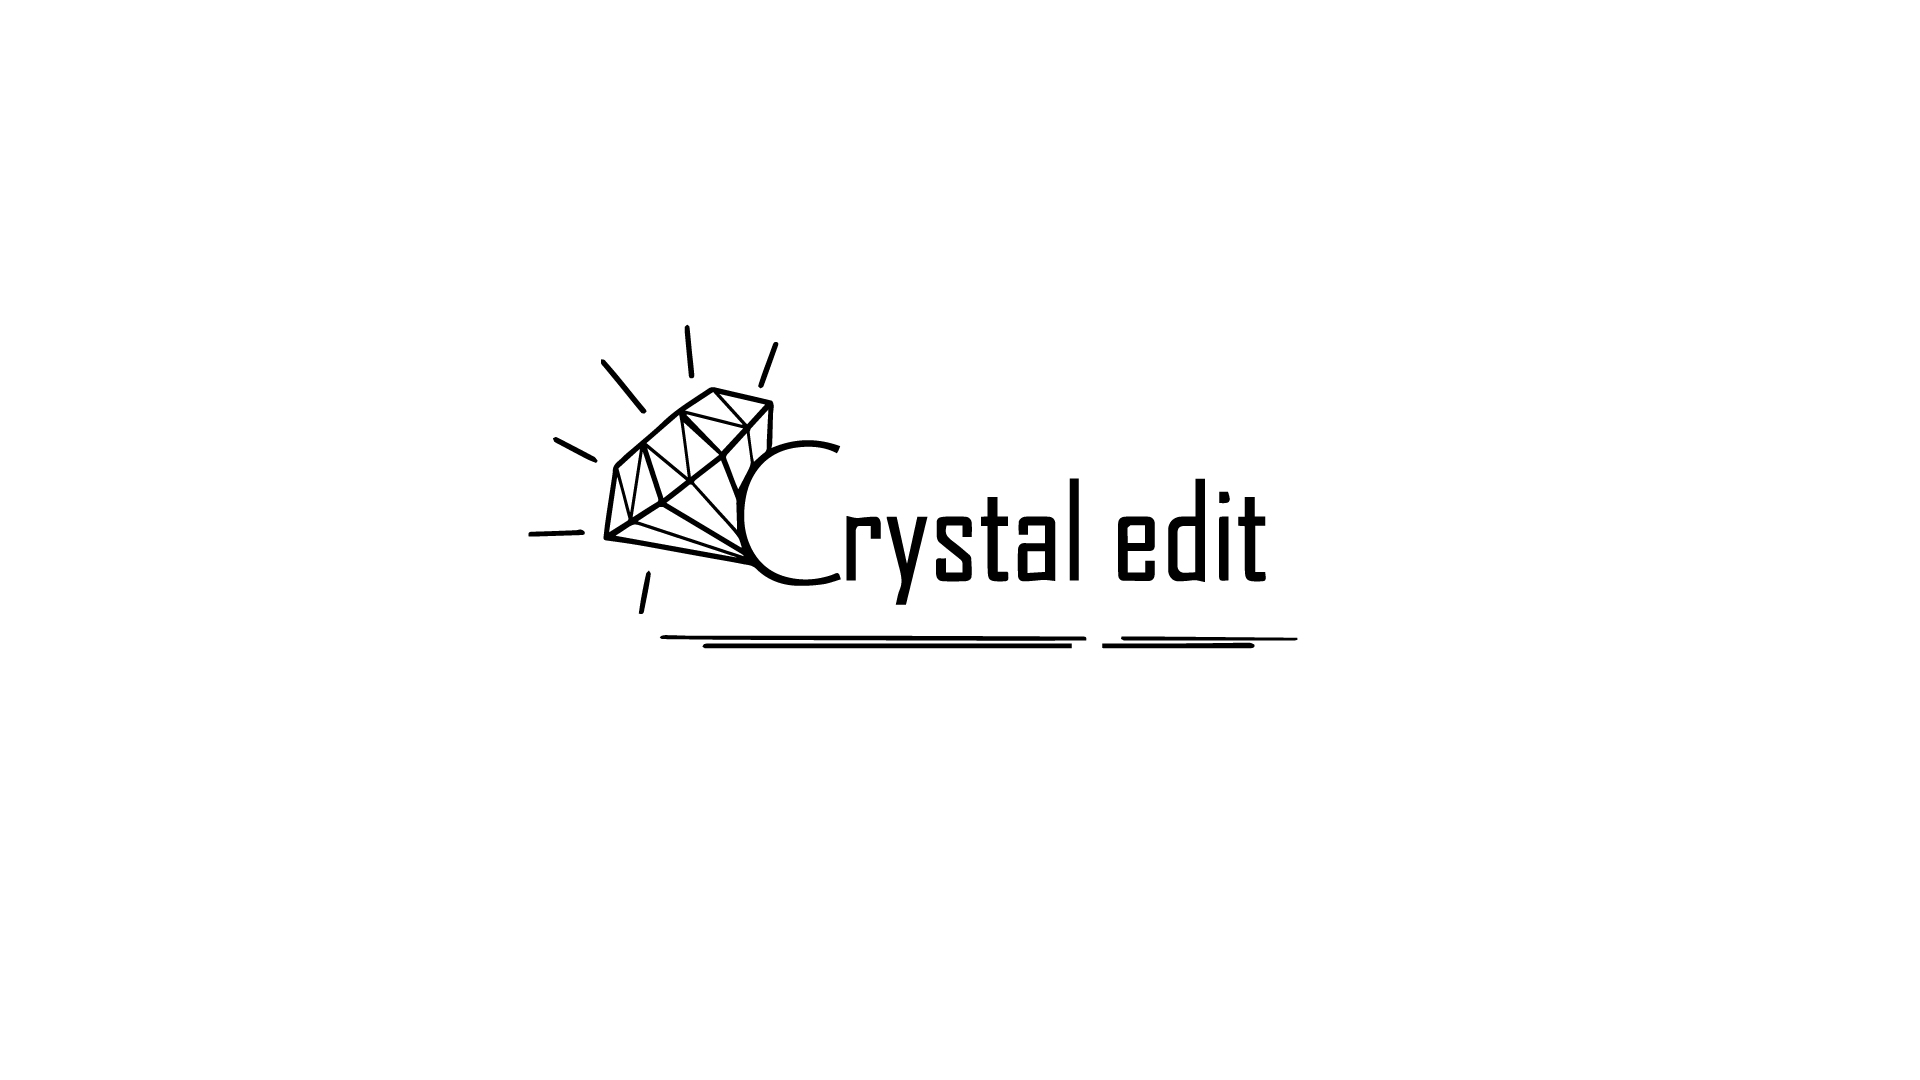 Crystal Hotels